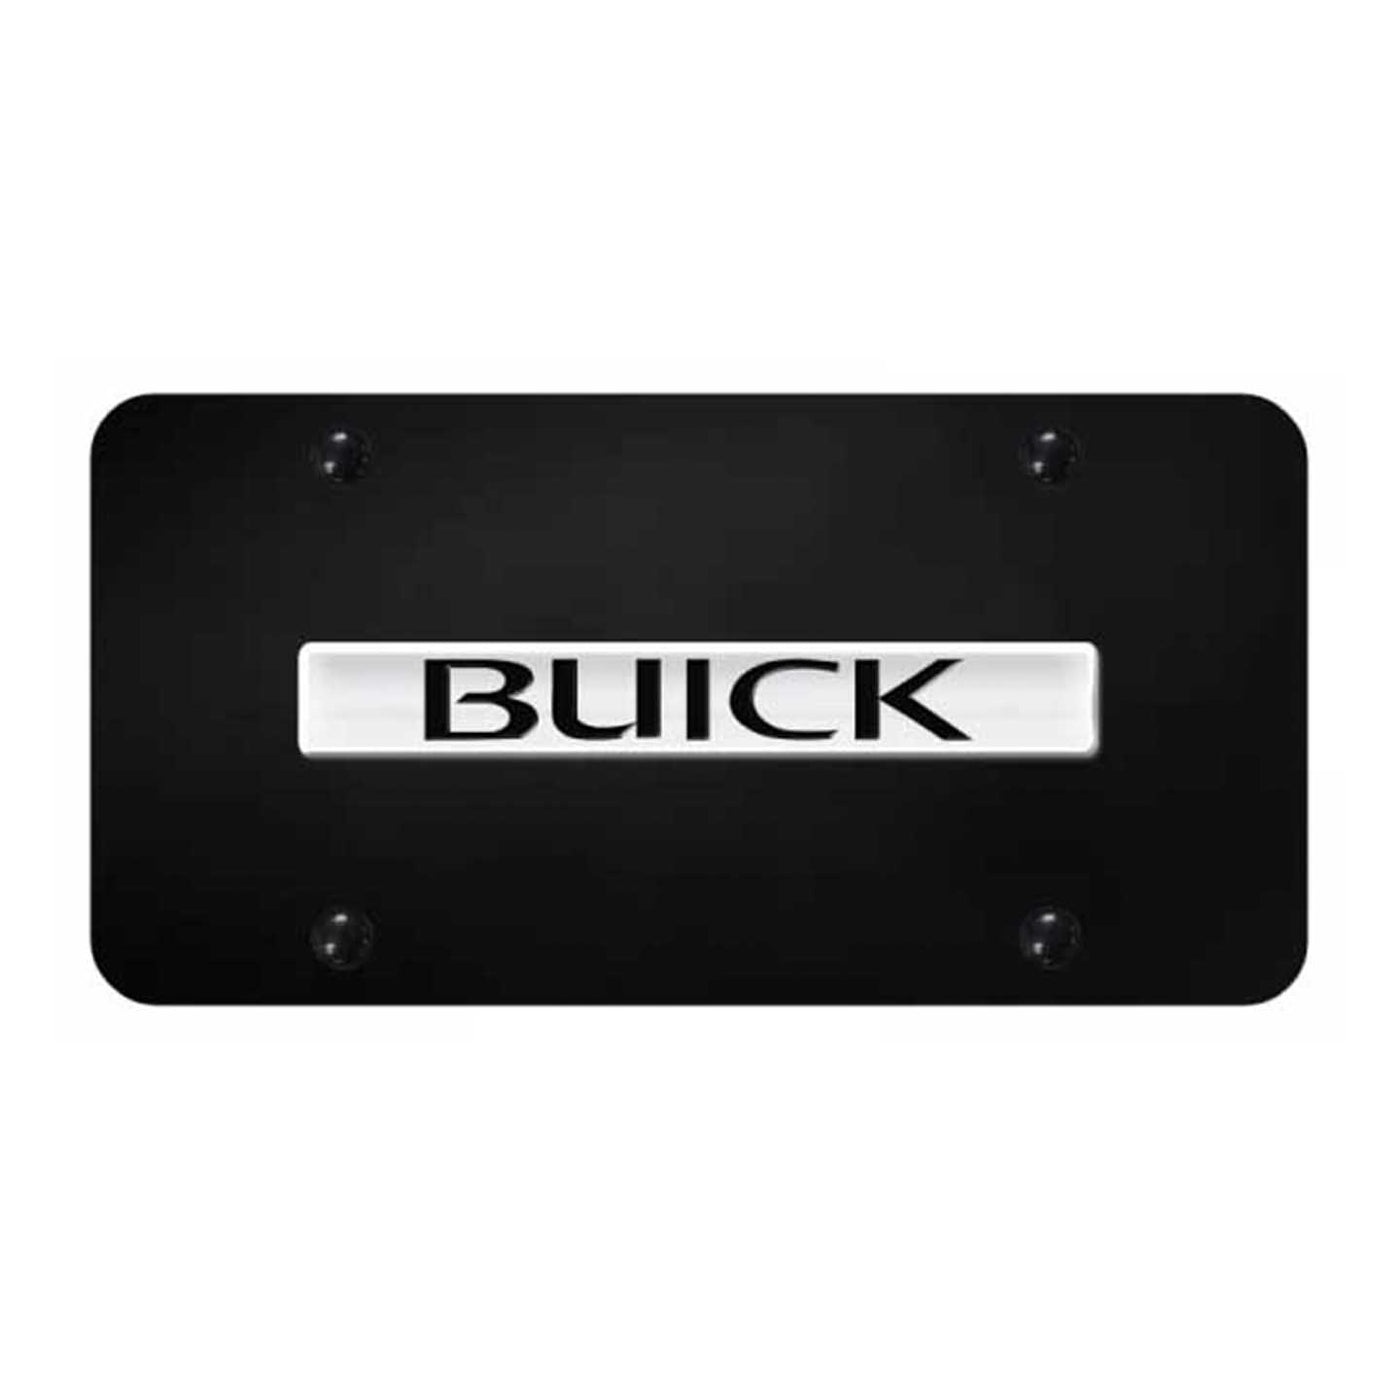 Buick Name License Plate - Chrome on Black